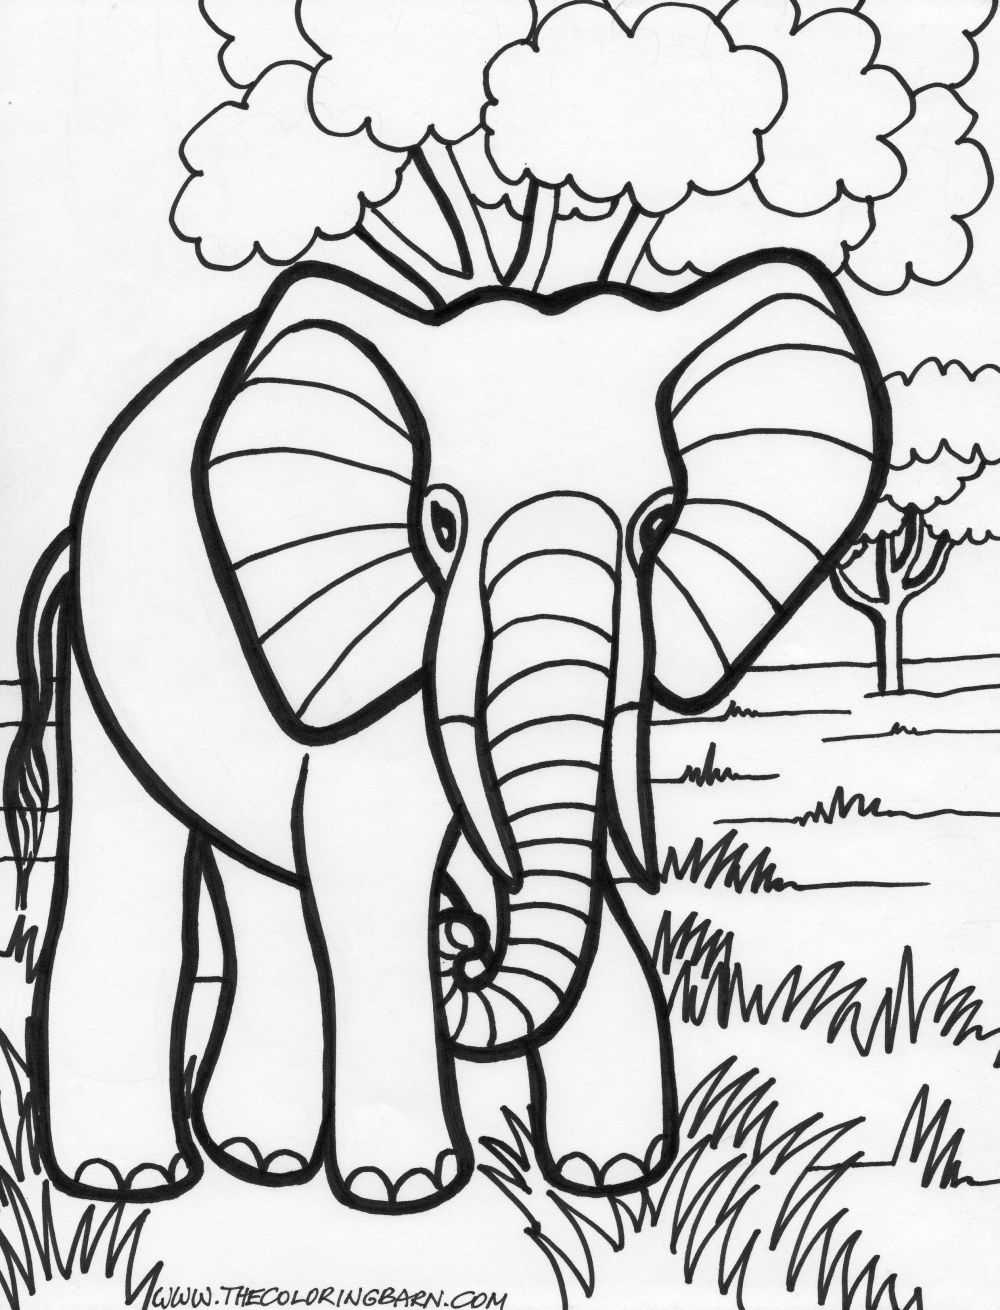 Download transmissionpress: 14 Elephant Coloring Pages for Kids